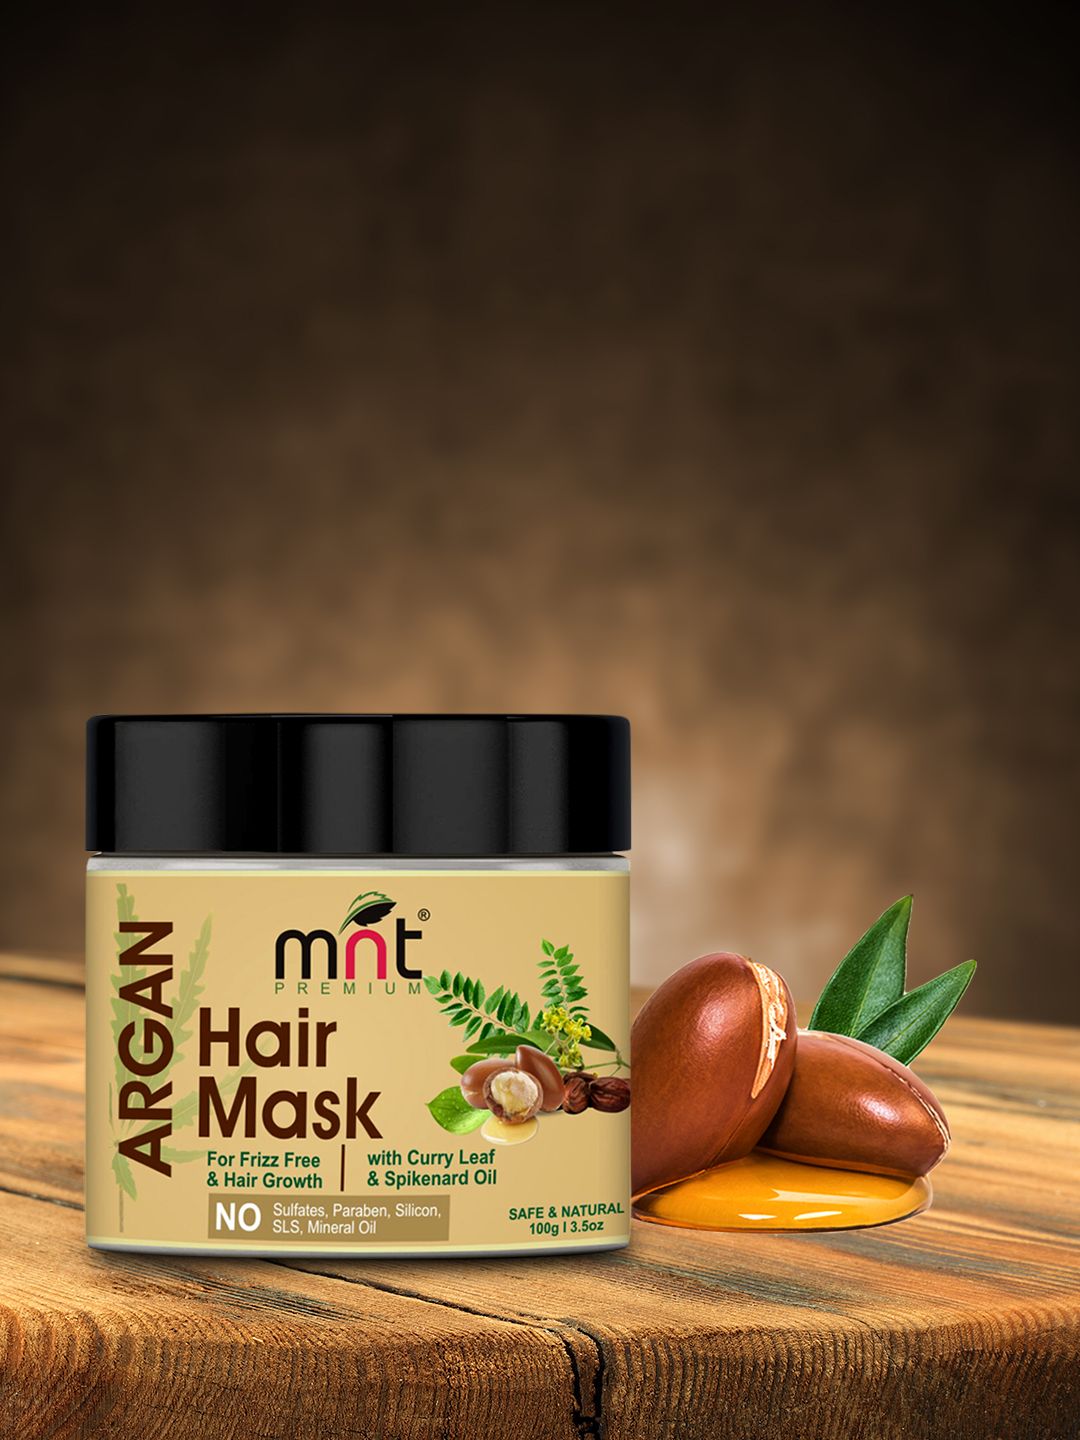 MNT Argan Hair Mask 100g Price in India